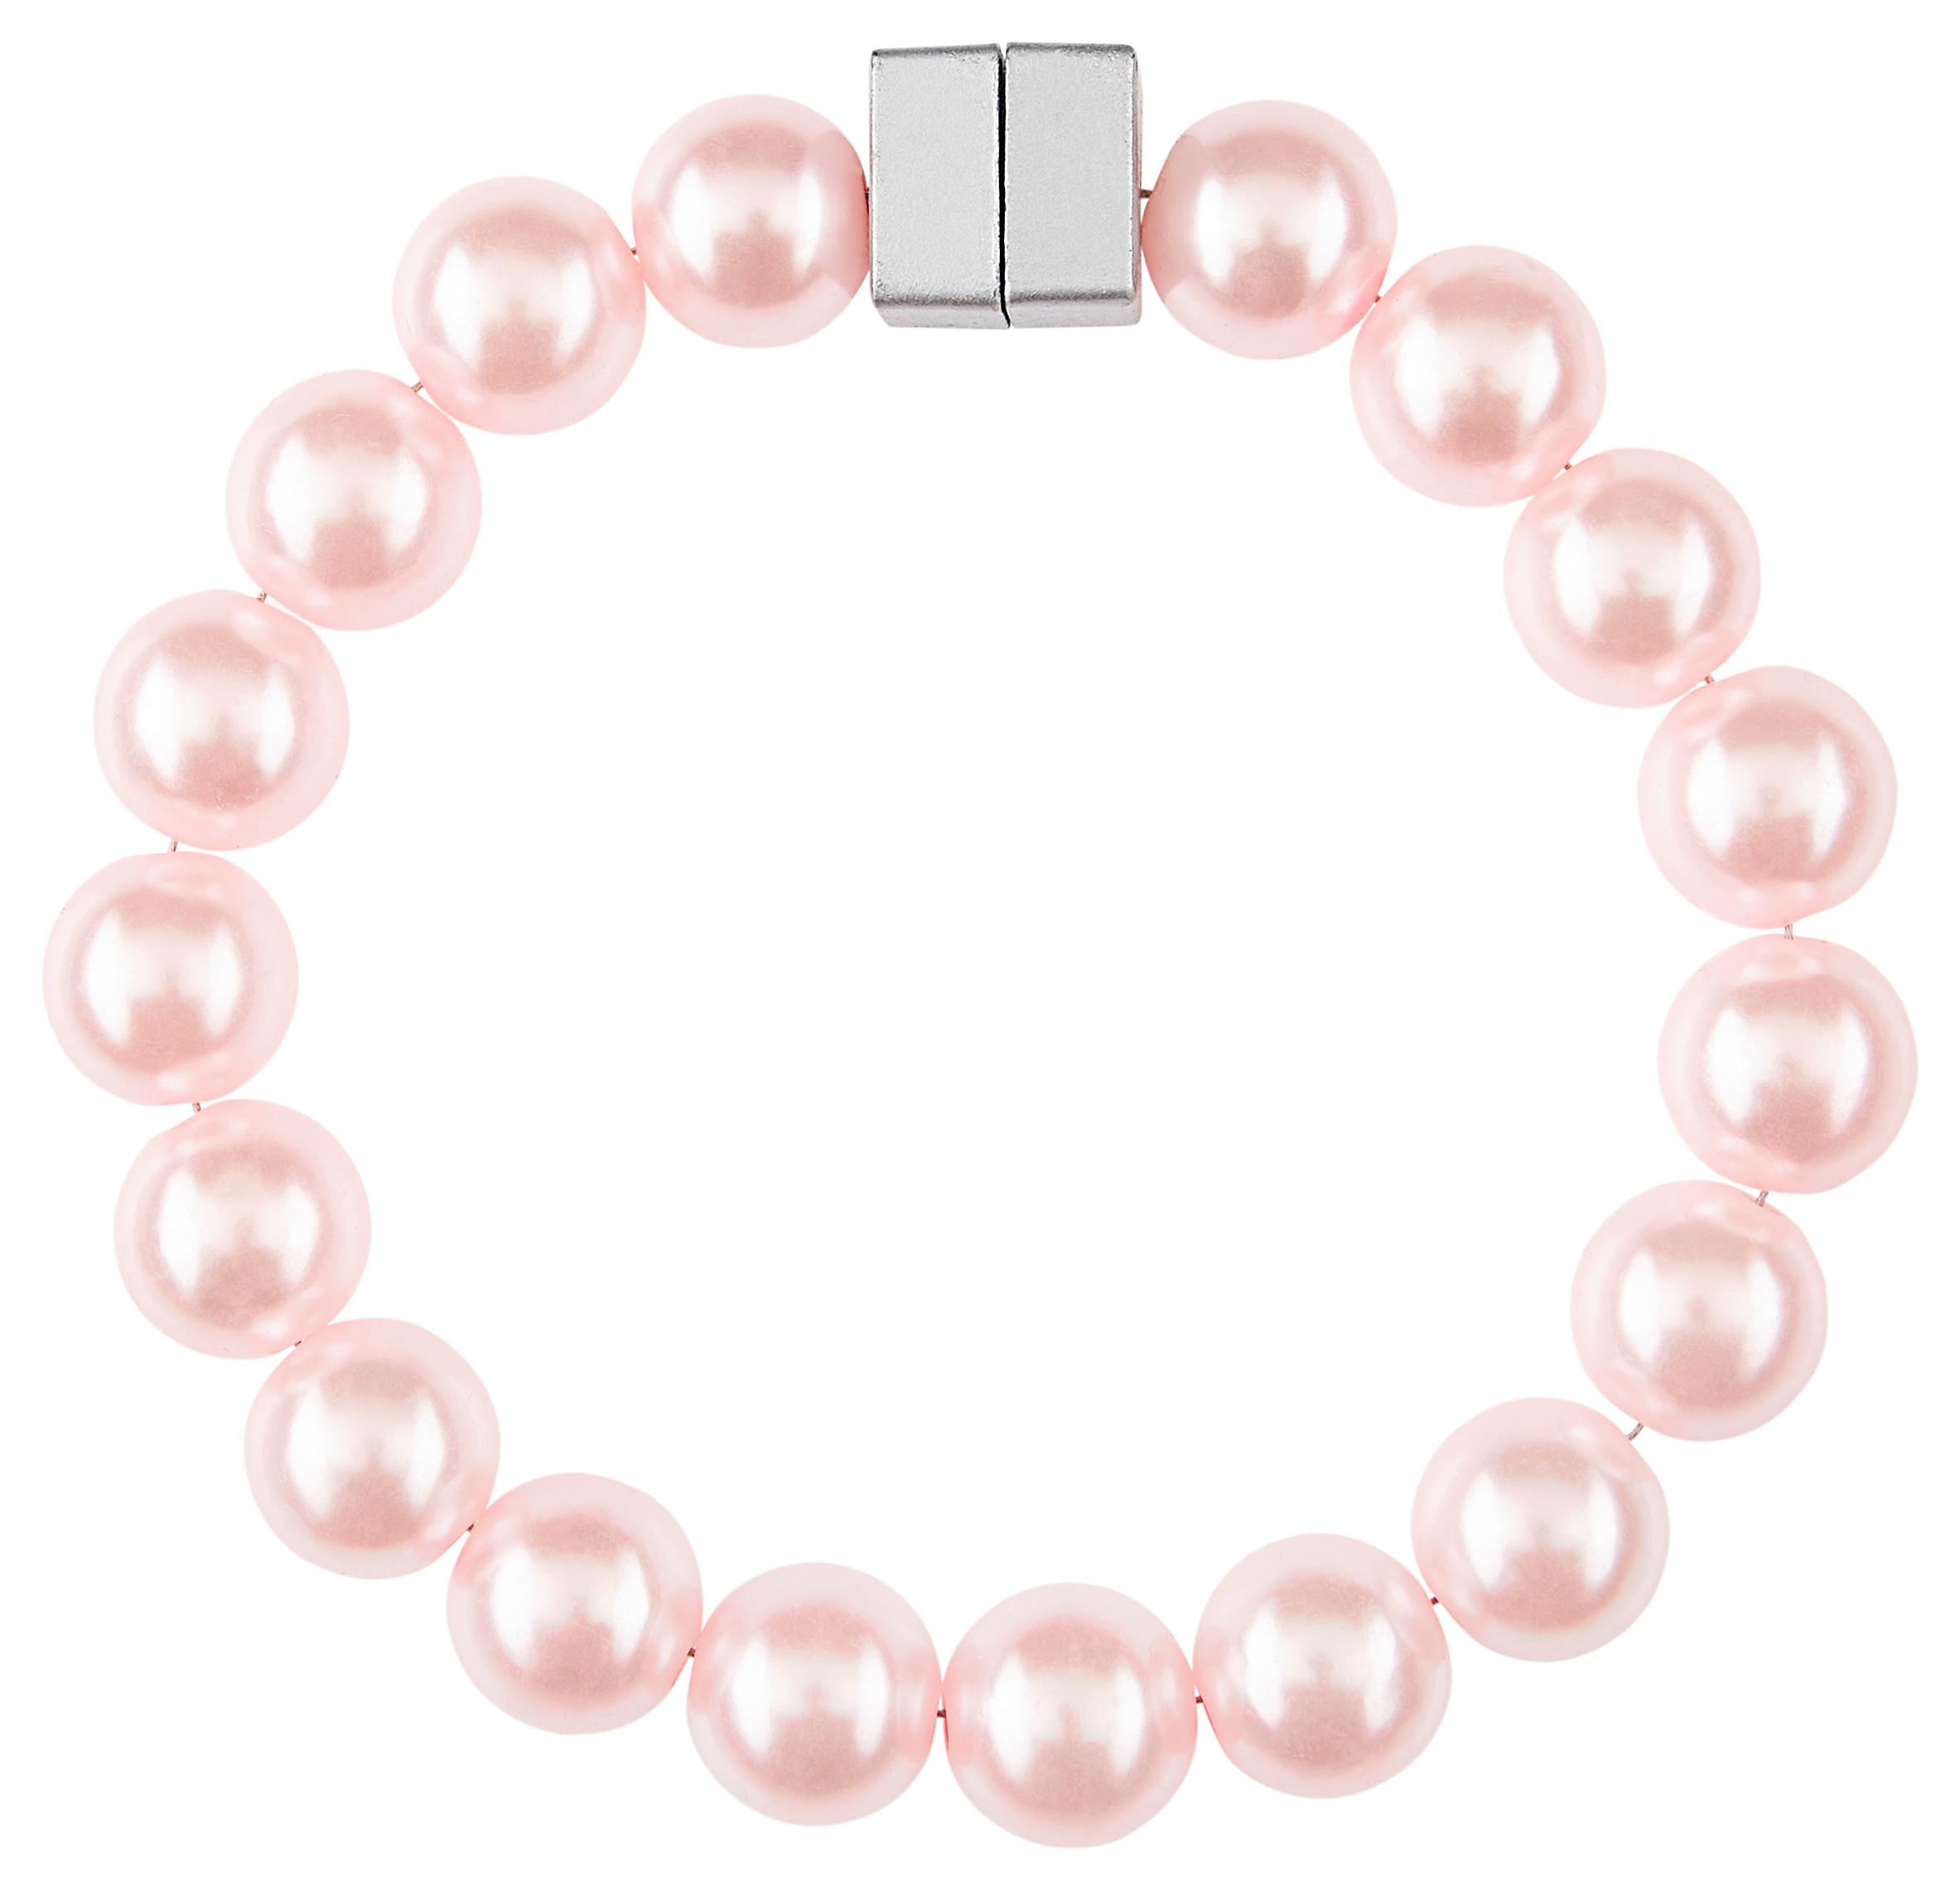 Raffhalter Perlenkette in Rosa - Rosa, ROMANTIK / LANDHAUS, Kunststoff (29cm) - Modern Living